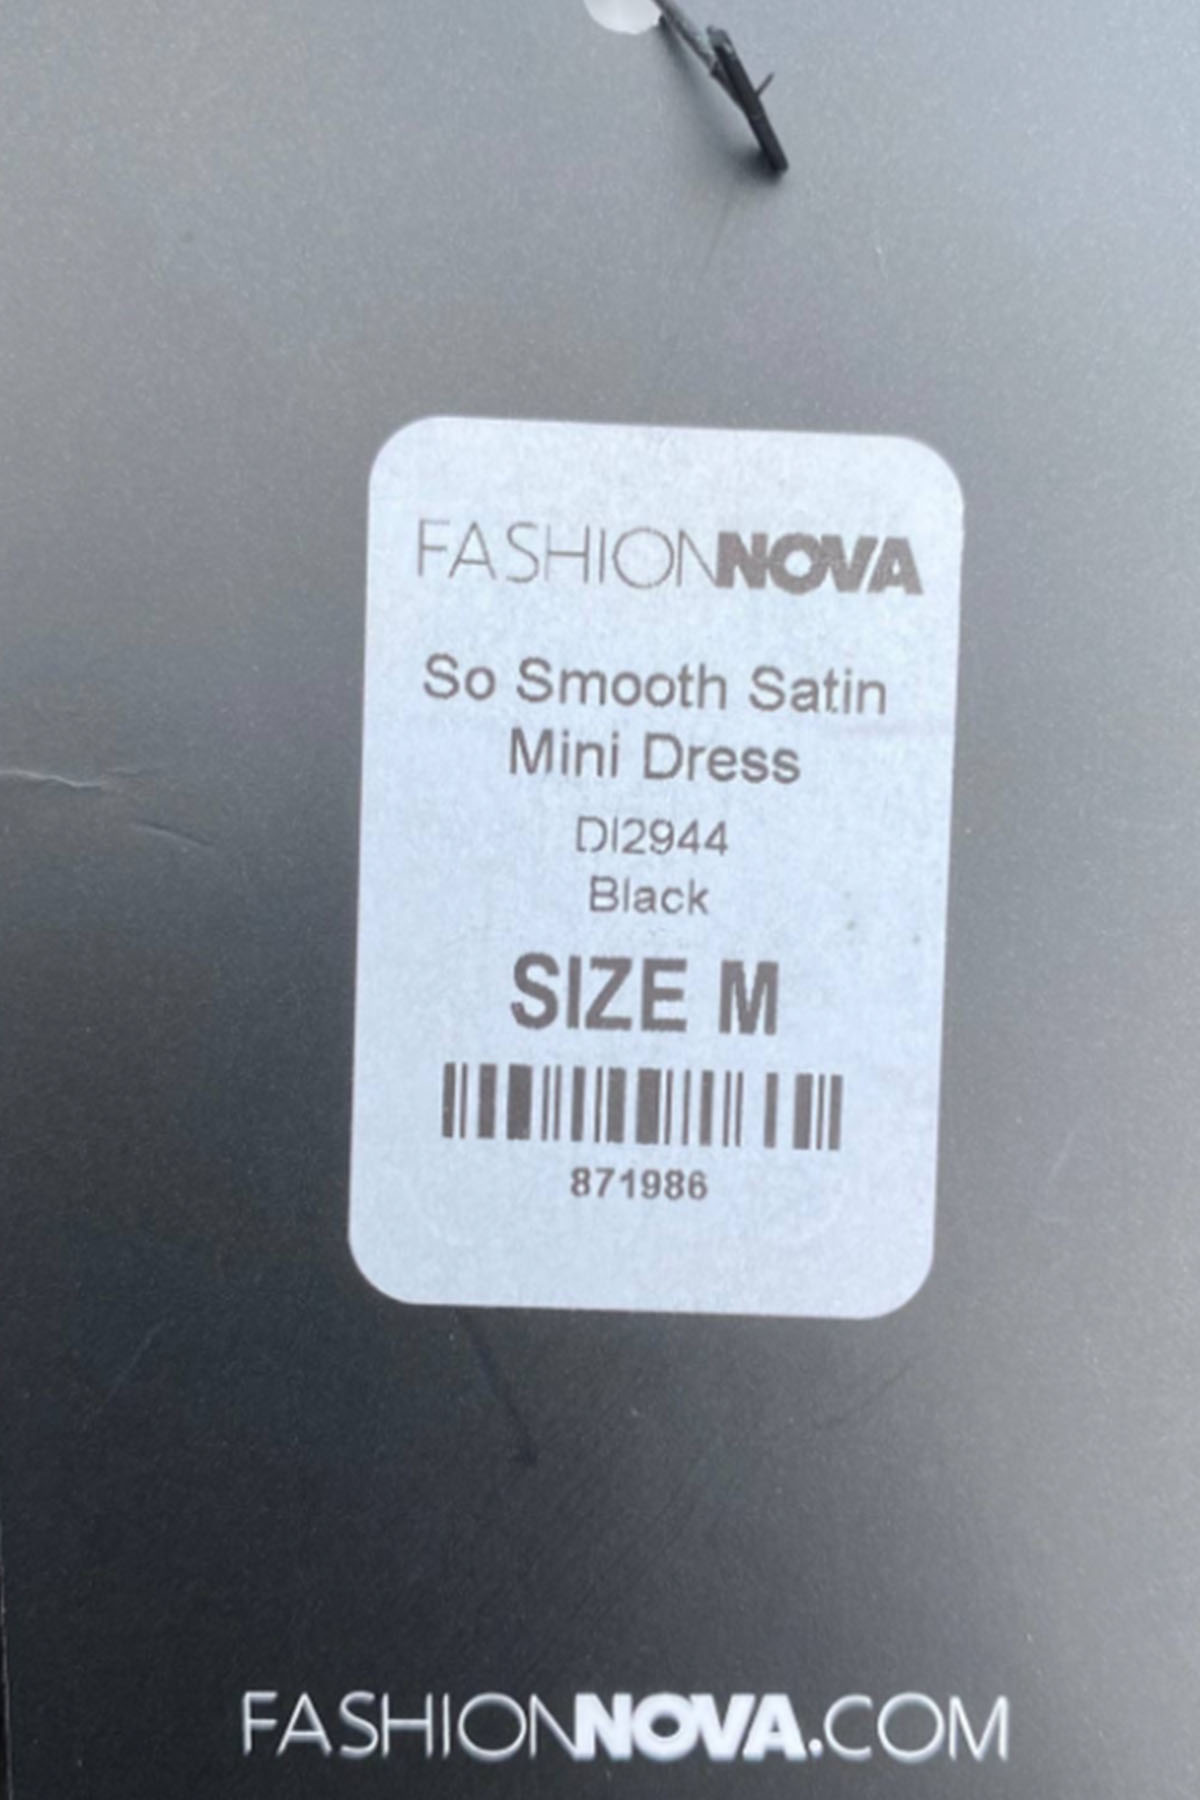 close up of a fashion nova price tag.